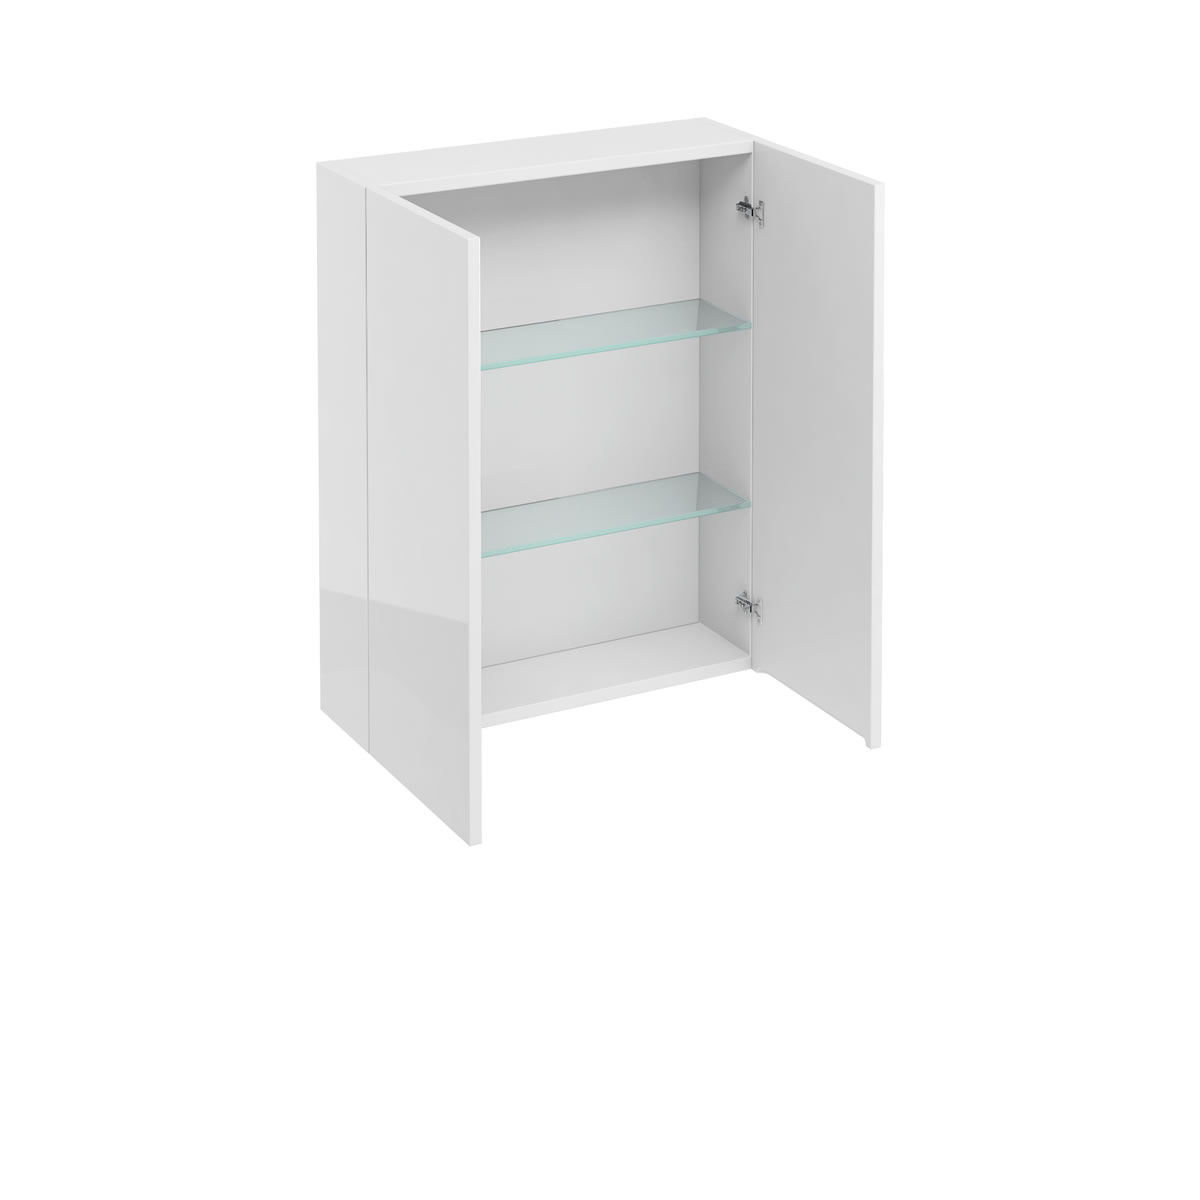 600 double door wall cabinet - White